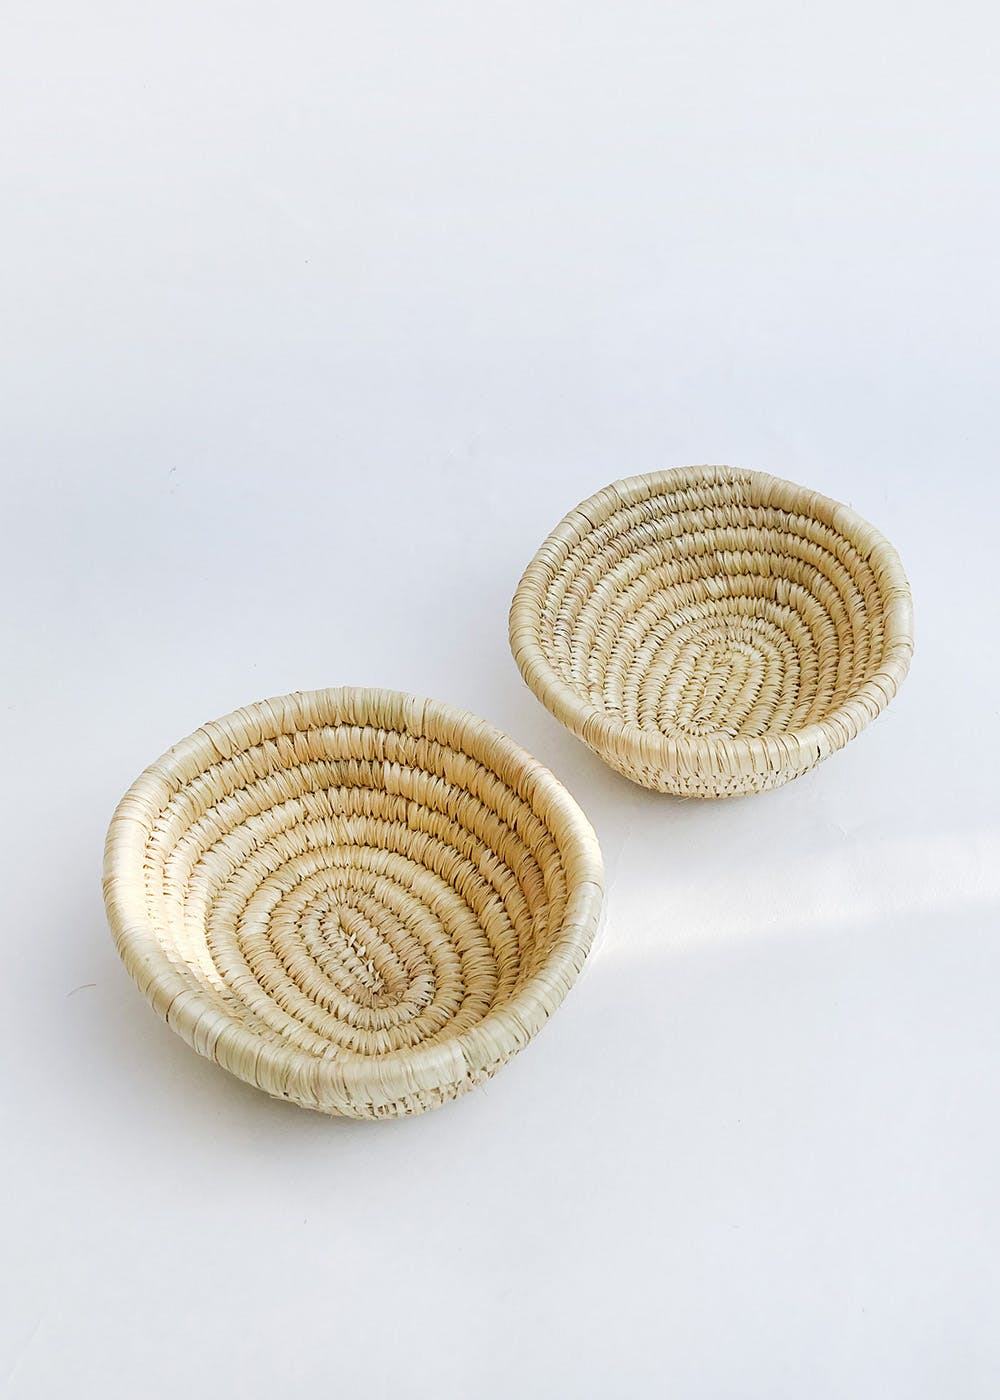 Handmade Moonj Grass Bowls- Set of 2